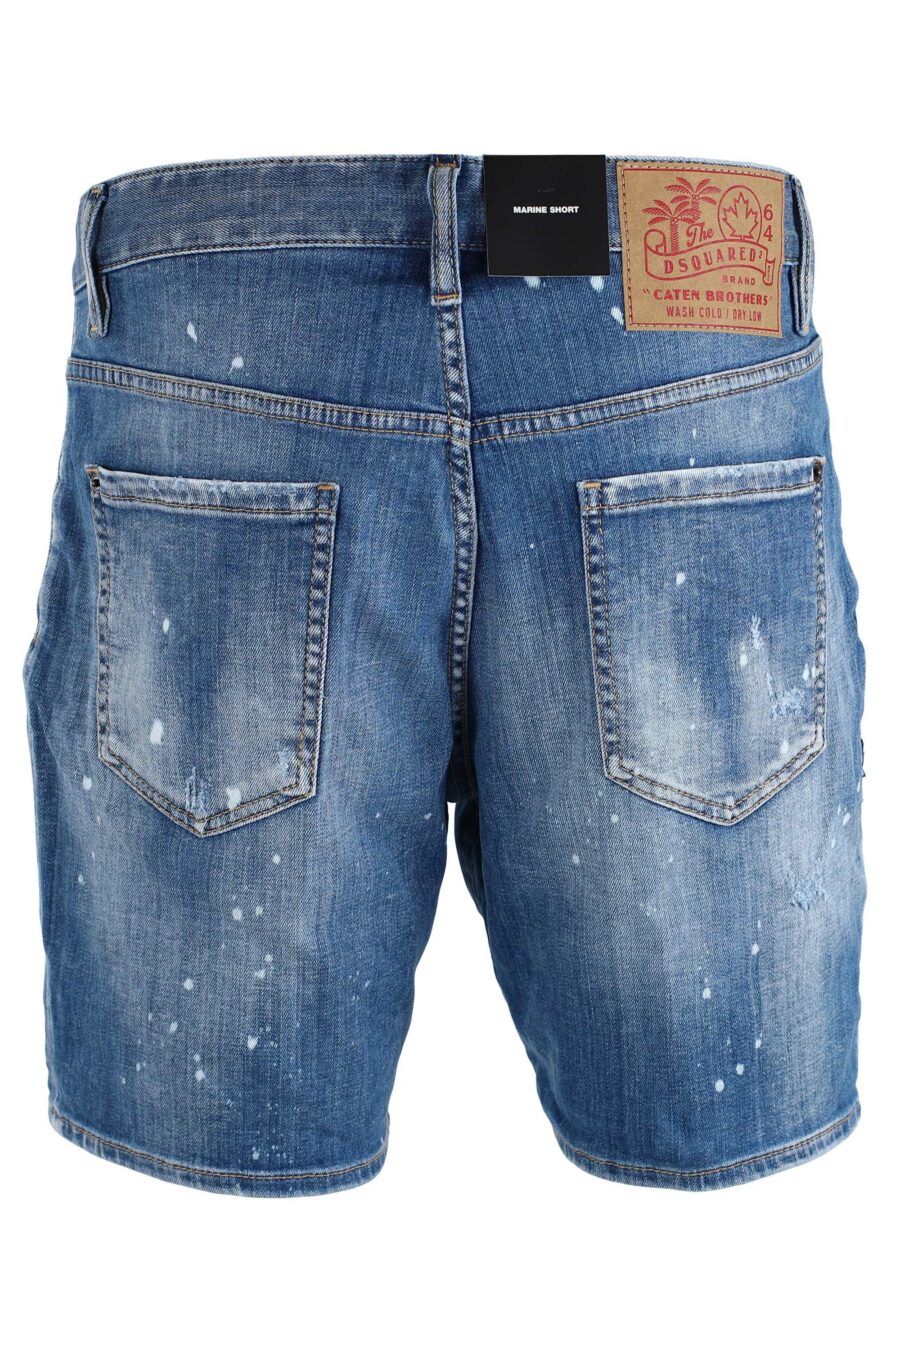 Denim shorts "marine short" blue with side patch - IMG 1635